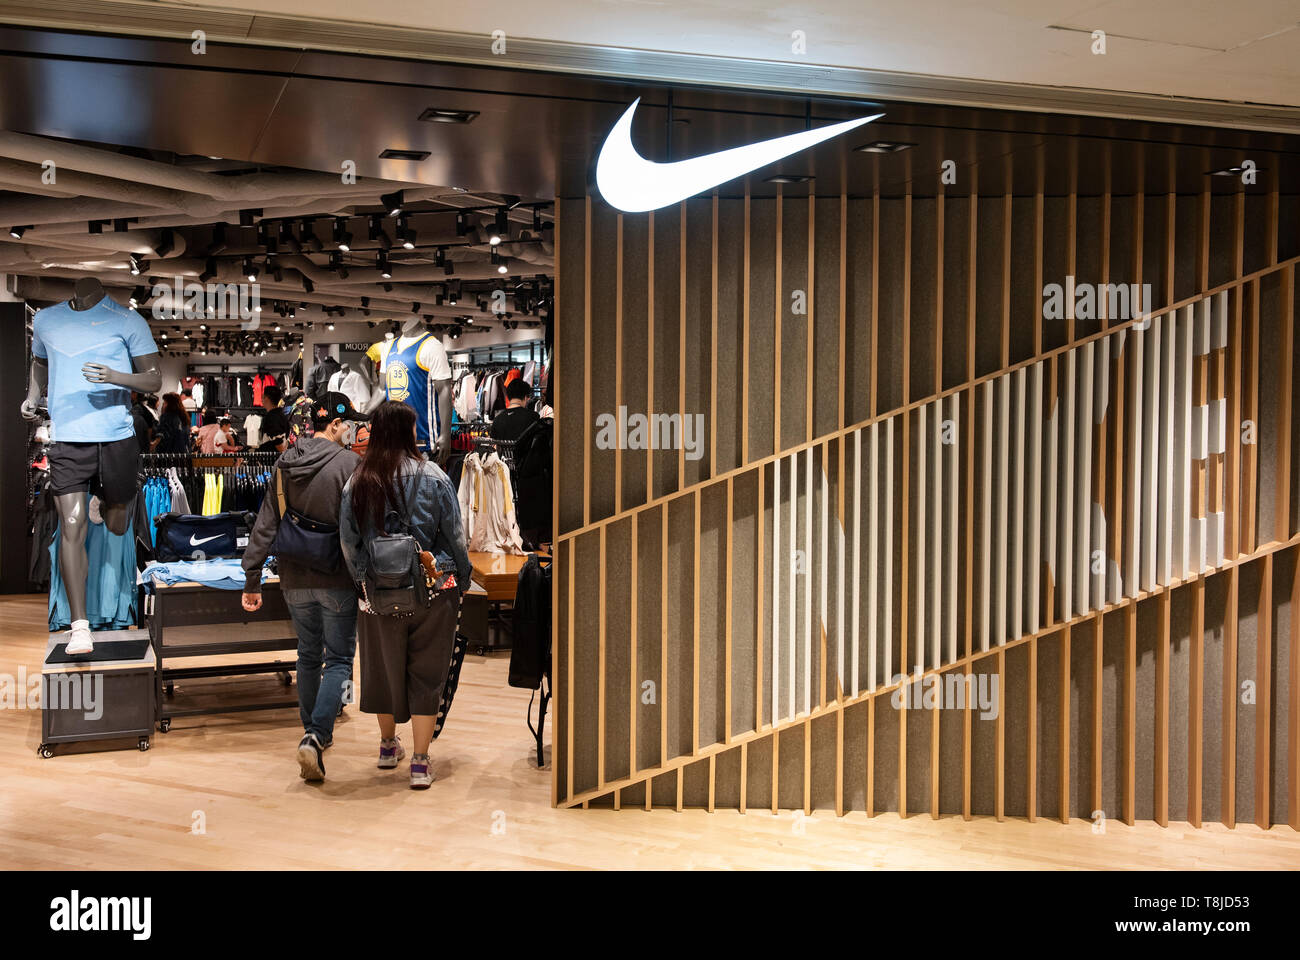 Multinacional americana marca de ropa deportiva Nike Store. Visto en Hong  Kong Fotografía de stock - Alamy